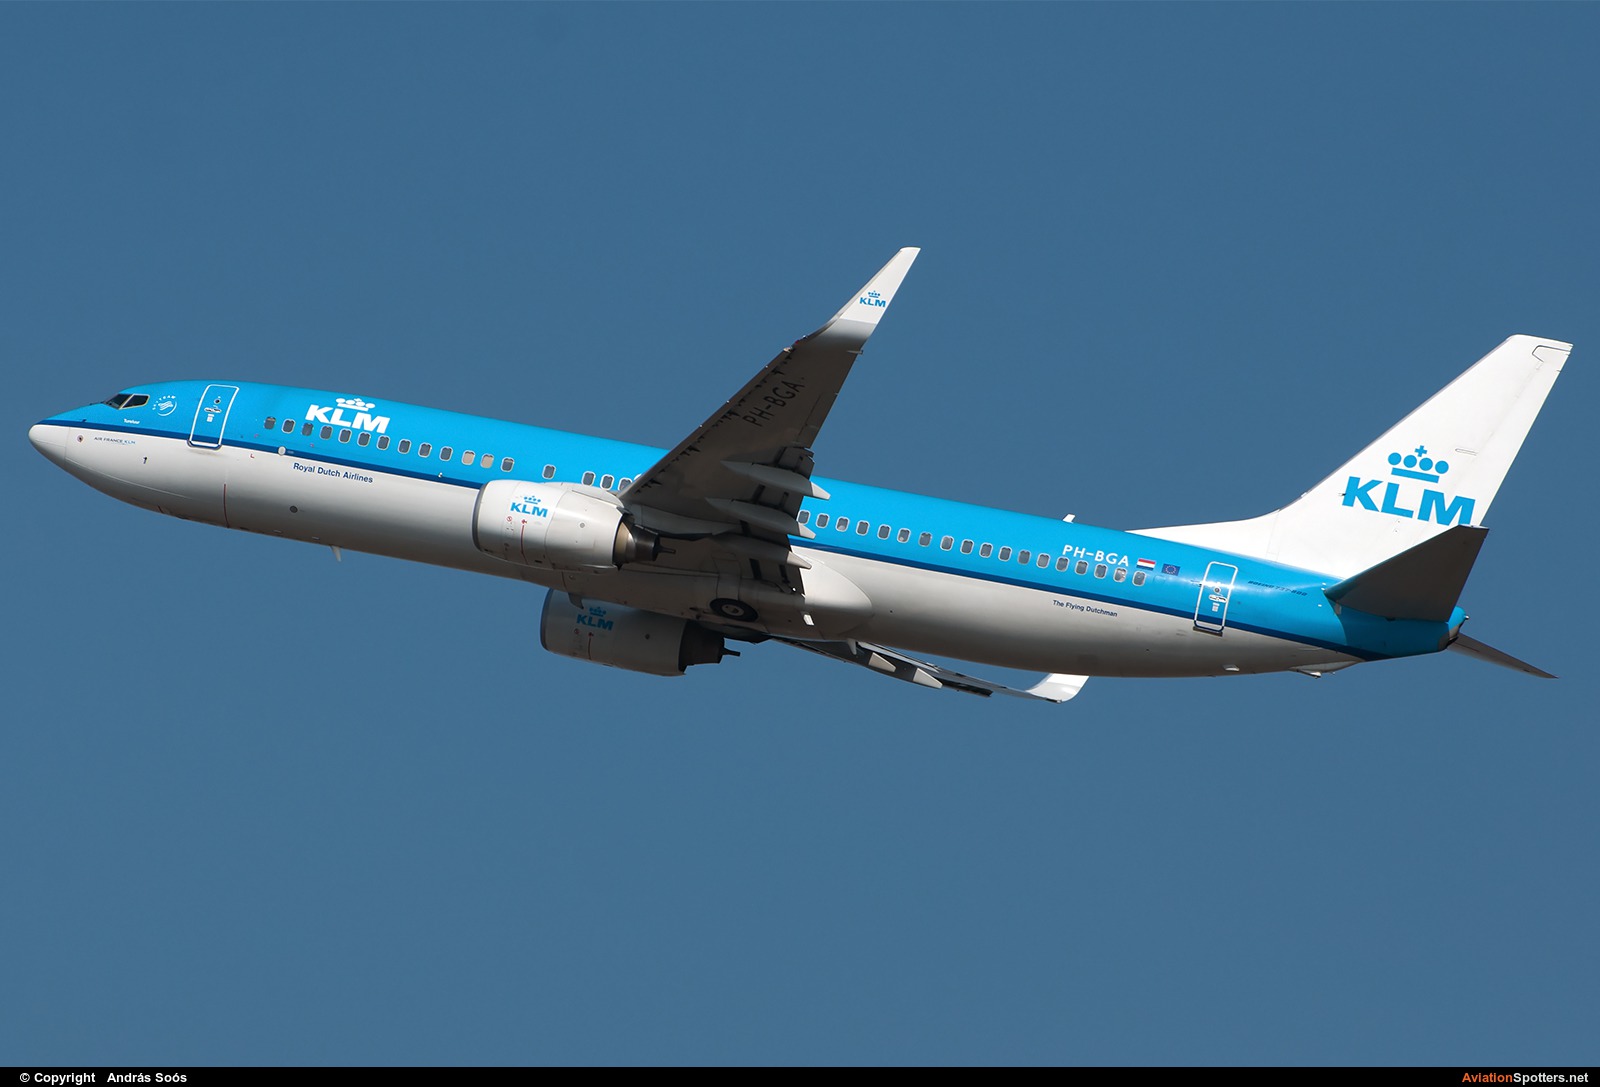 KLM  -  737-800  (PH-BGA) By András Soós (sas1965)